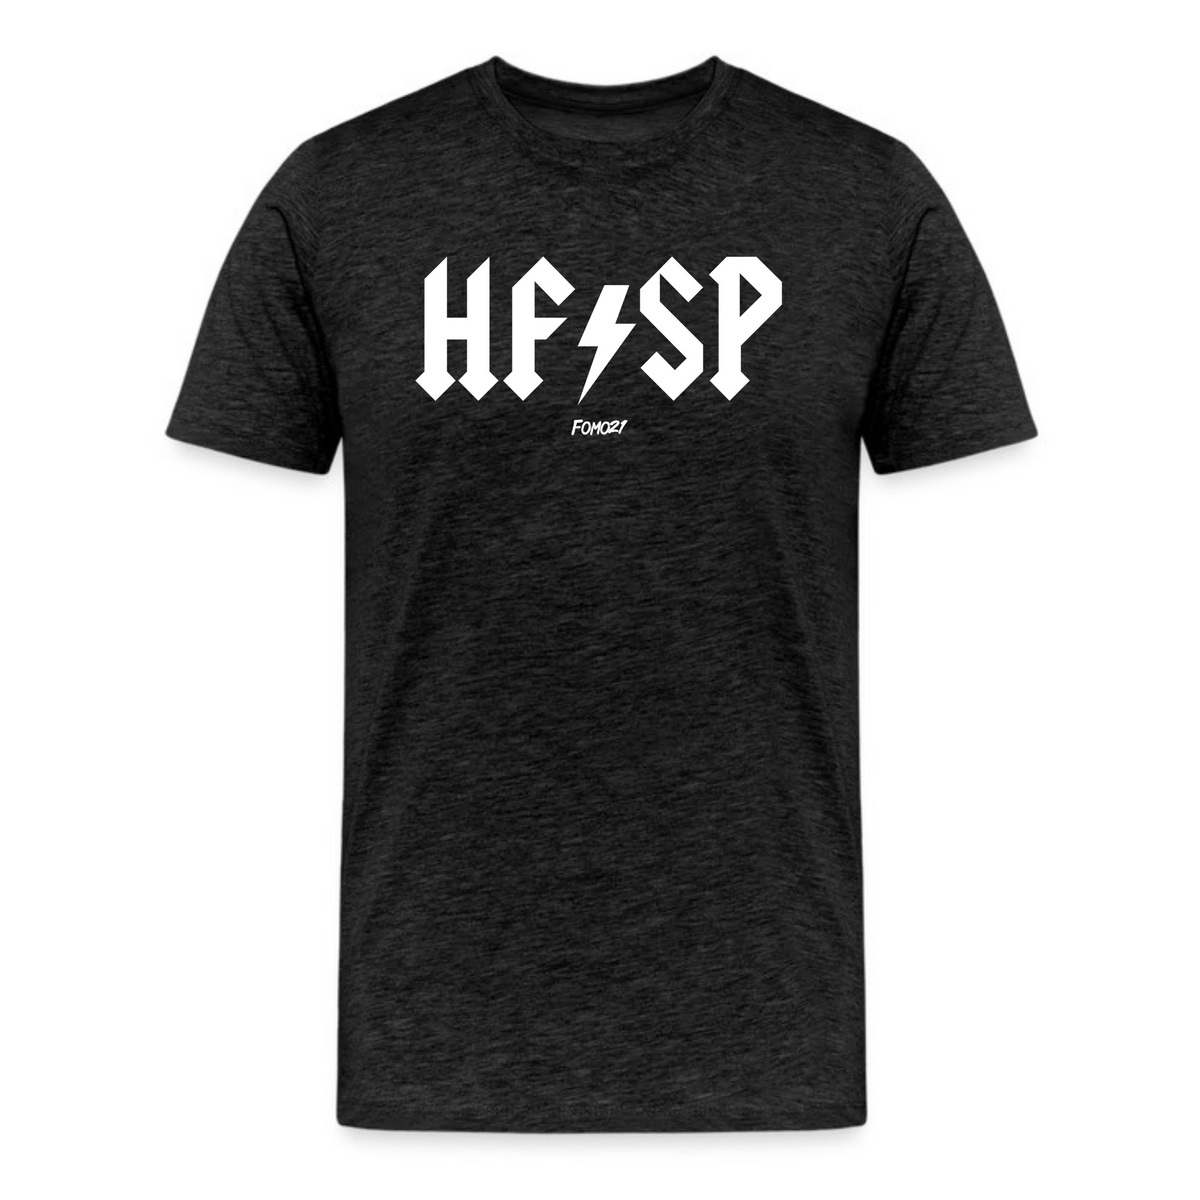 HFSP 2 (White Lettering) Bitcoin T-Shirt - fomo21